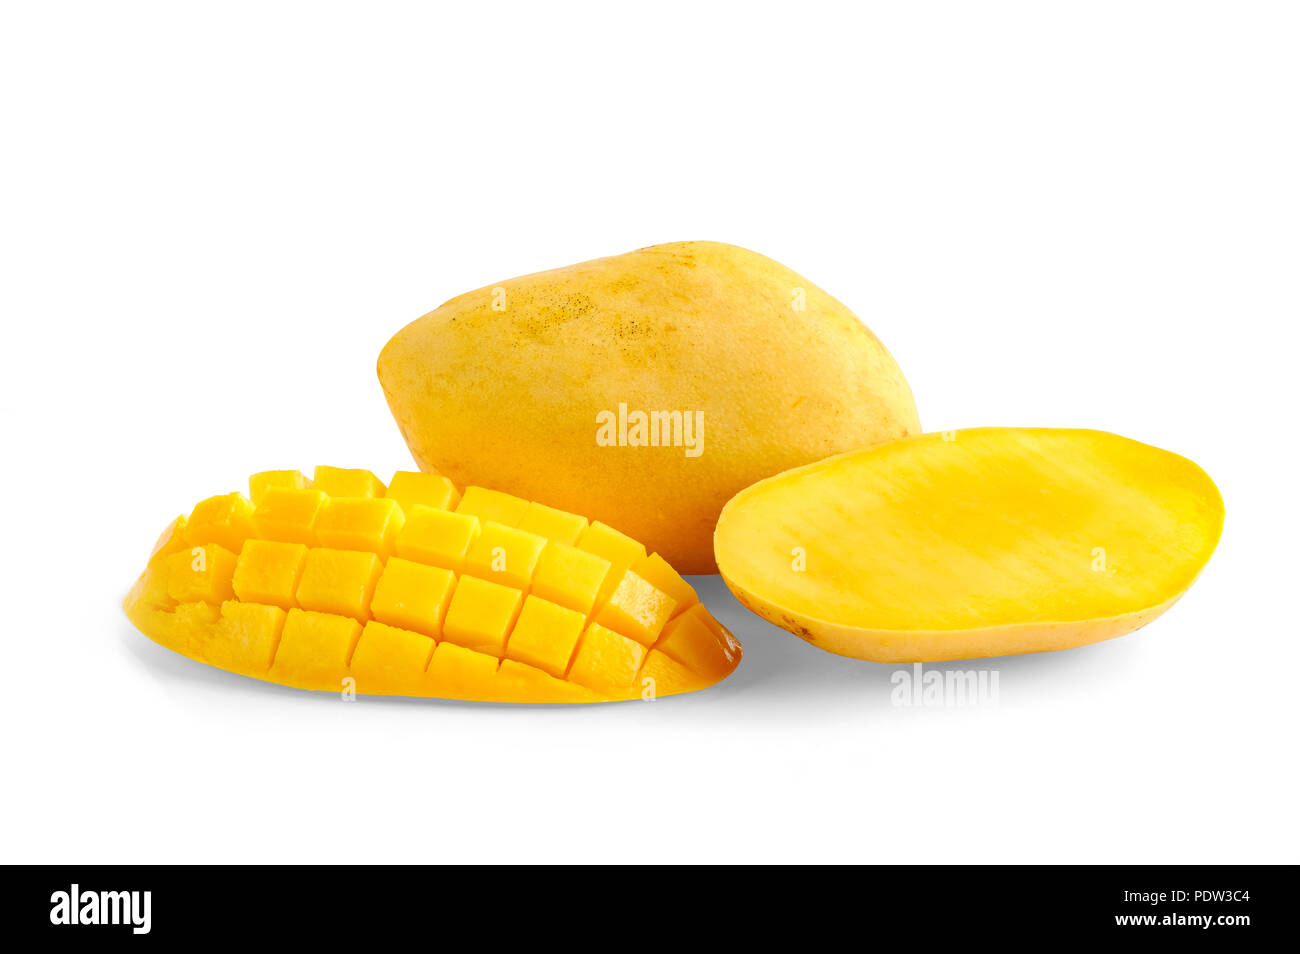 Ripe yellow carabao mango with cube sliced one on white background Stock Photo